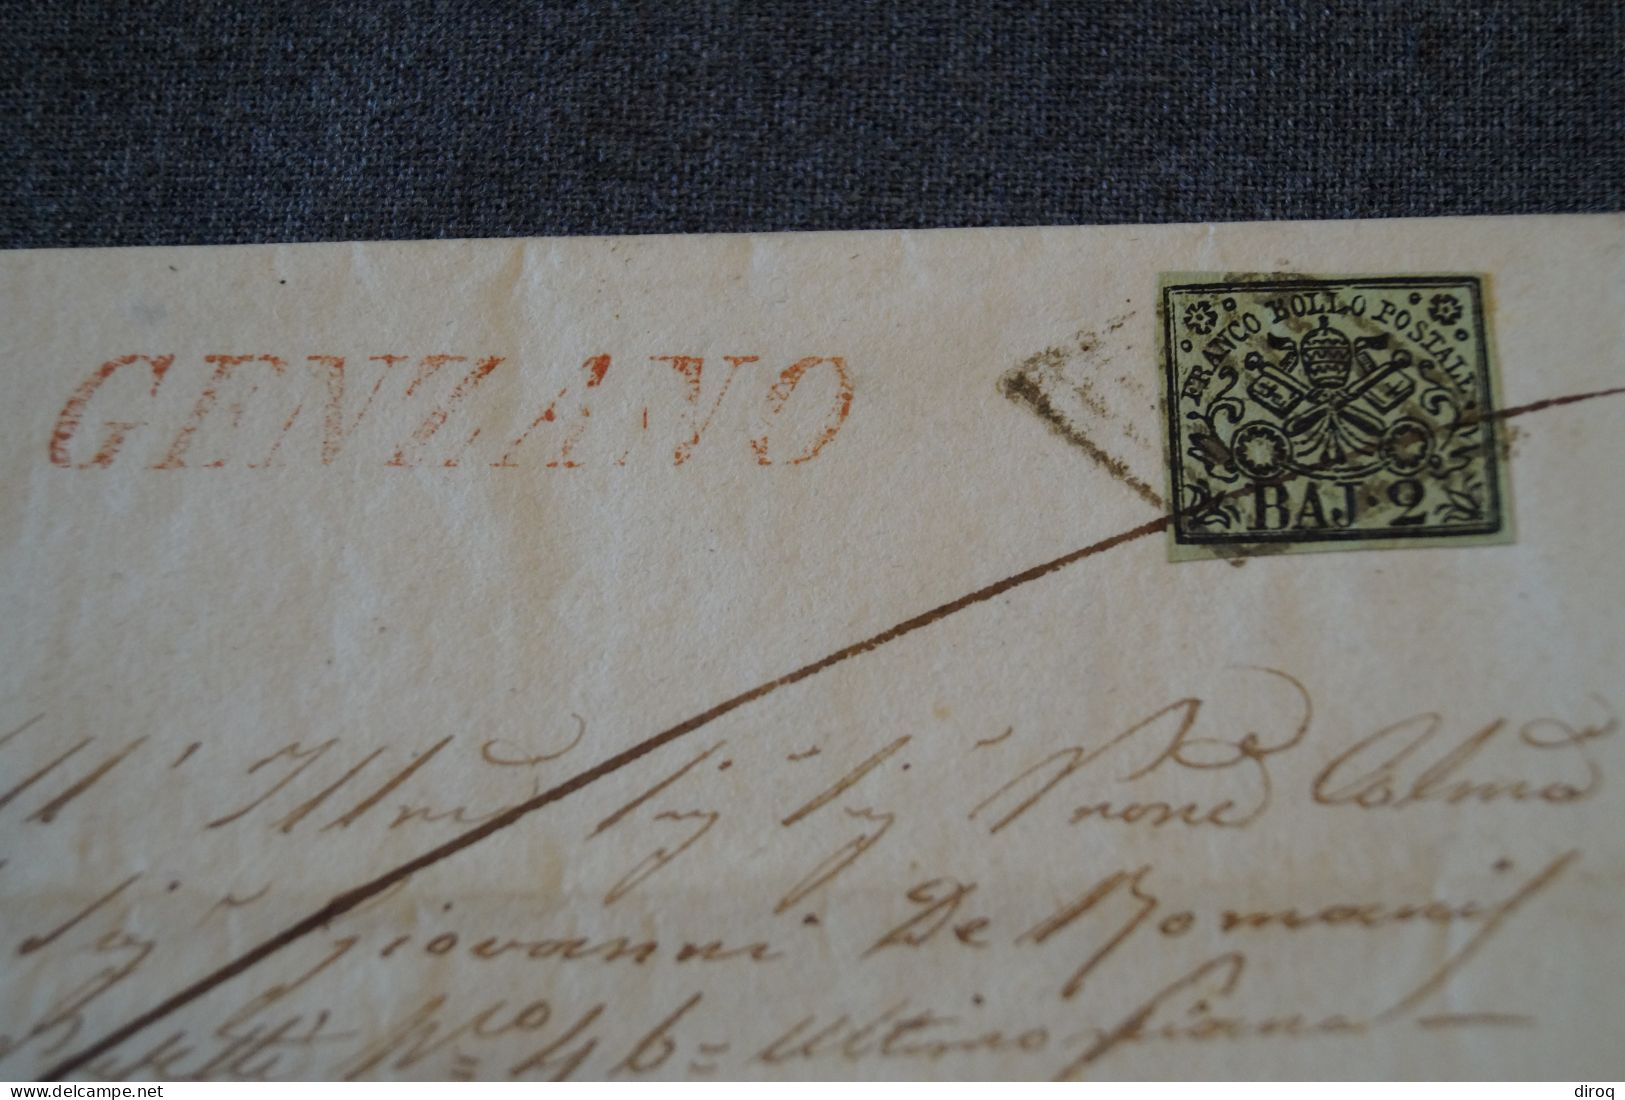 Ancien Envoi Franco Bollo Postale BAJ-2, Italia 1857,courrier à Identifier,pour Collection - Stato Pontificio